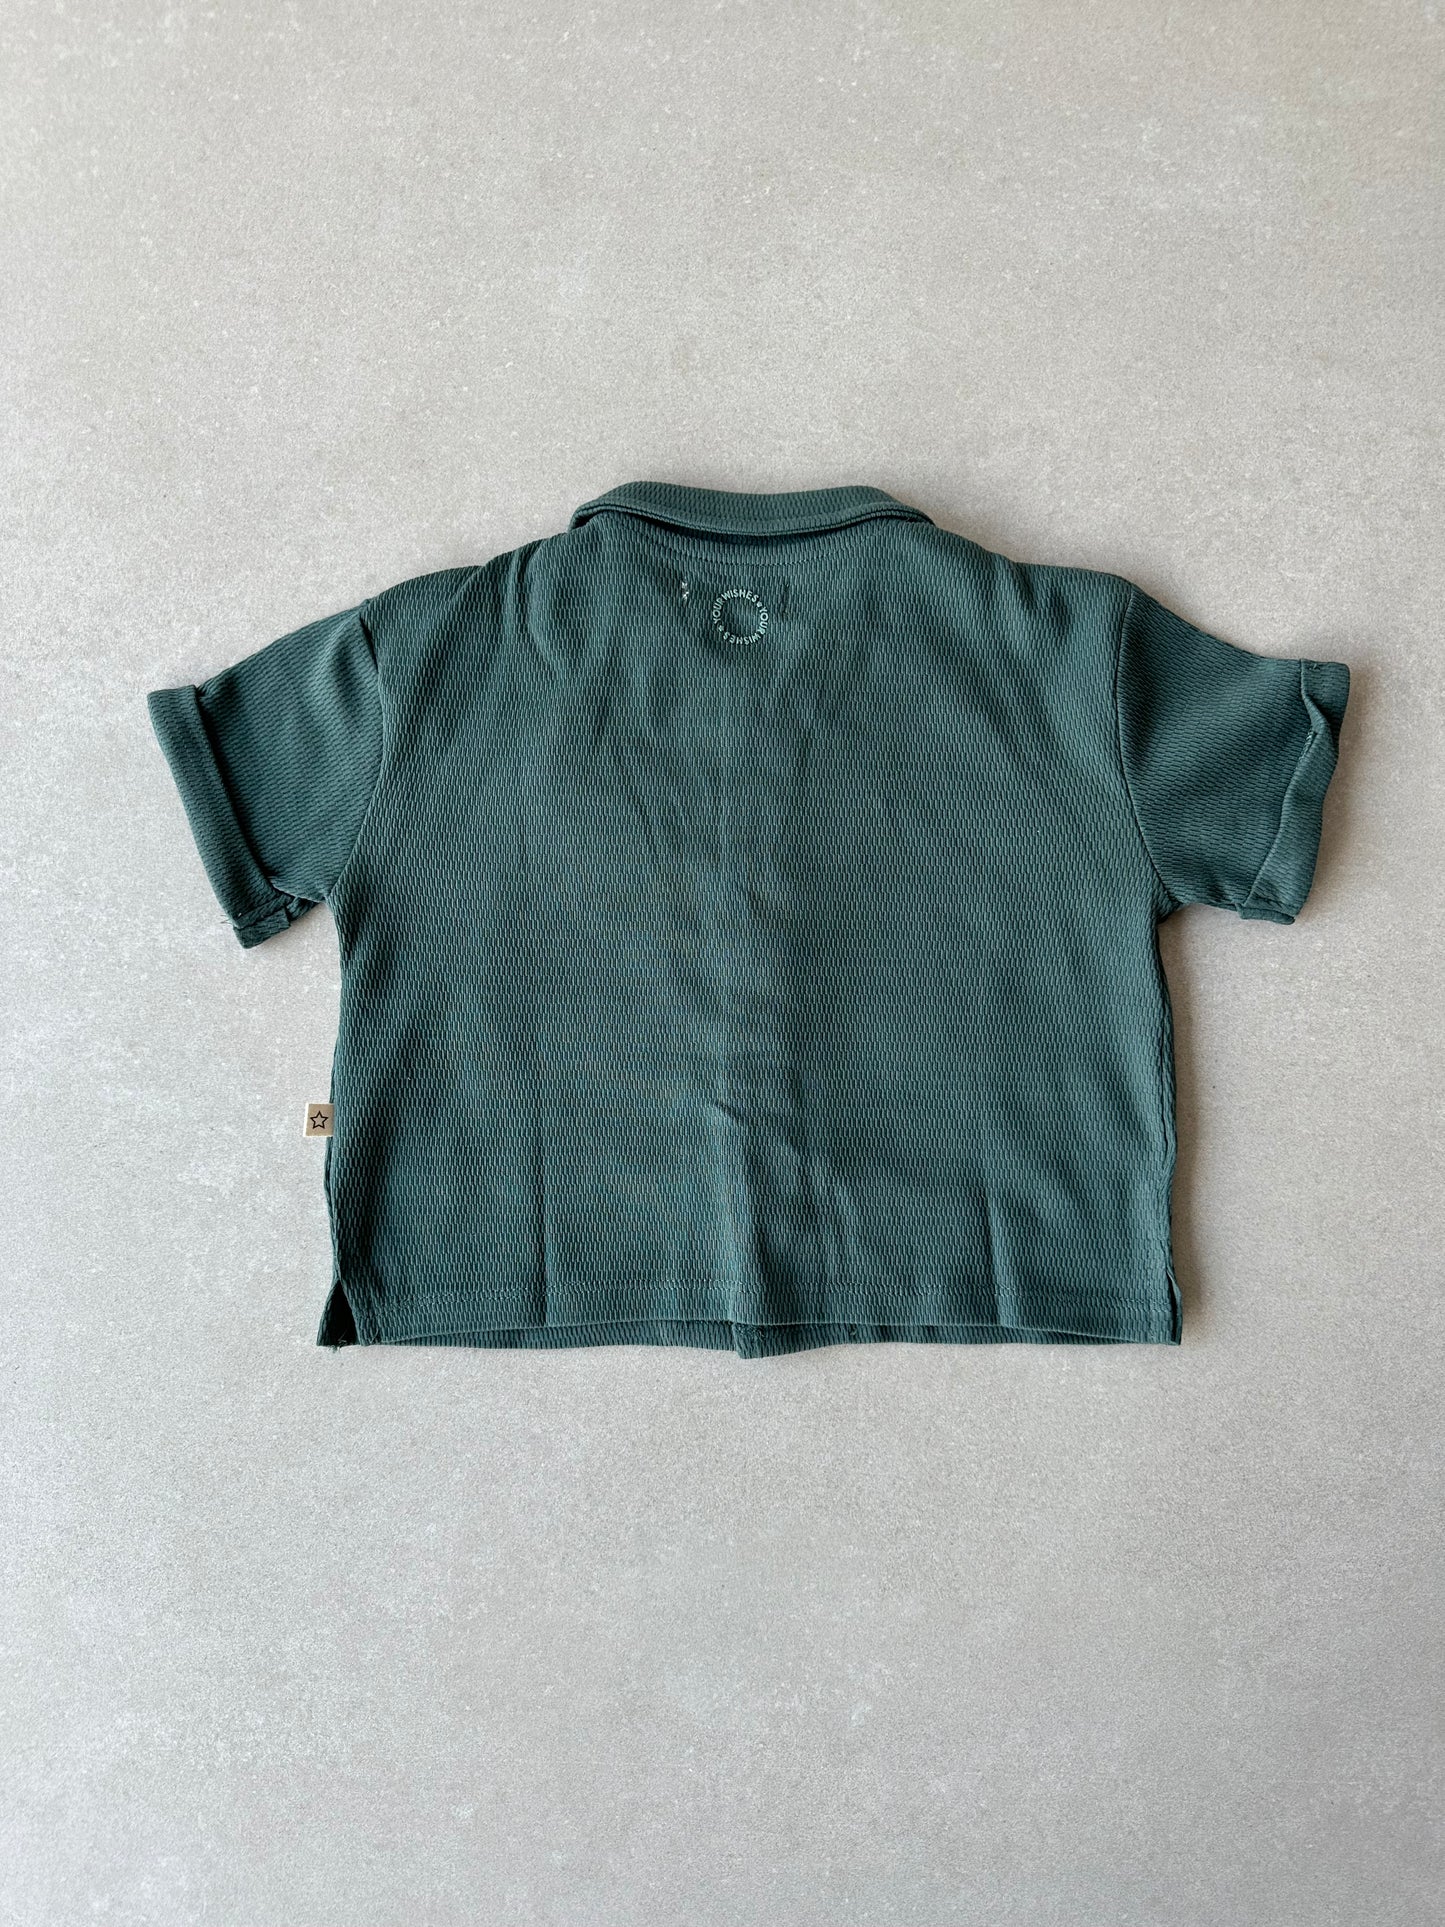 Pine Shirt